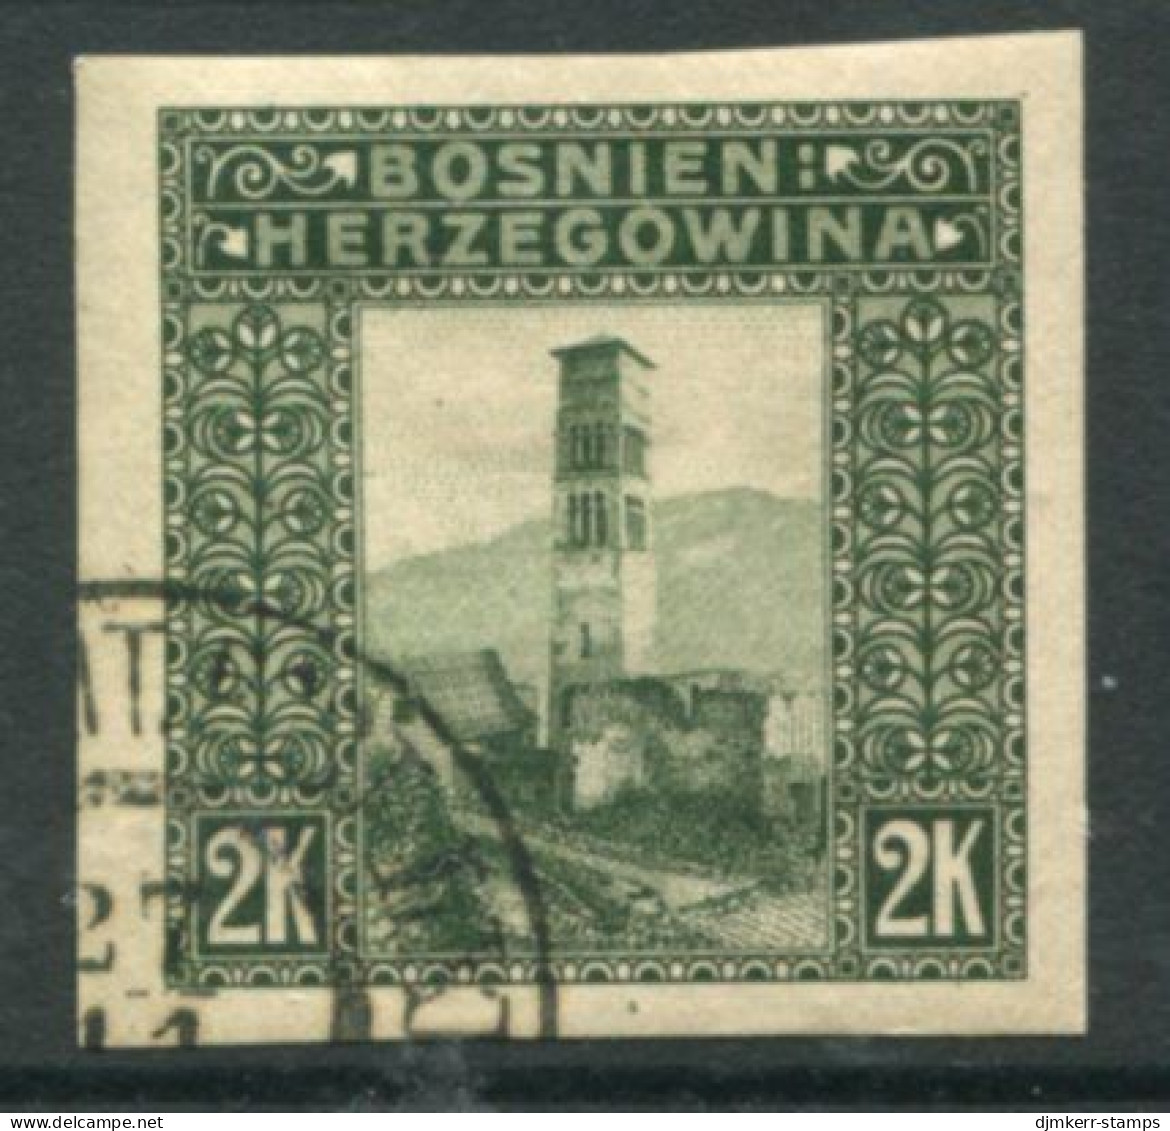 BOSNIA & HERZEGOVINA 1906 Definitive 2 Kr. Imperforate Used..  Michel 43U, SG 200C - Bosnia And Herzegovina